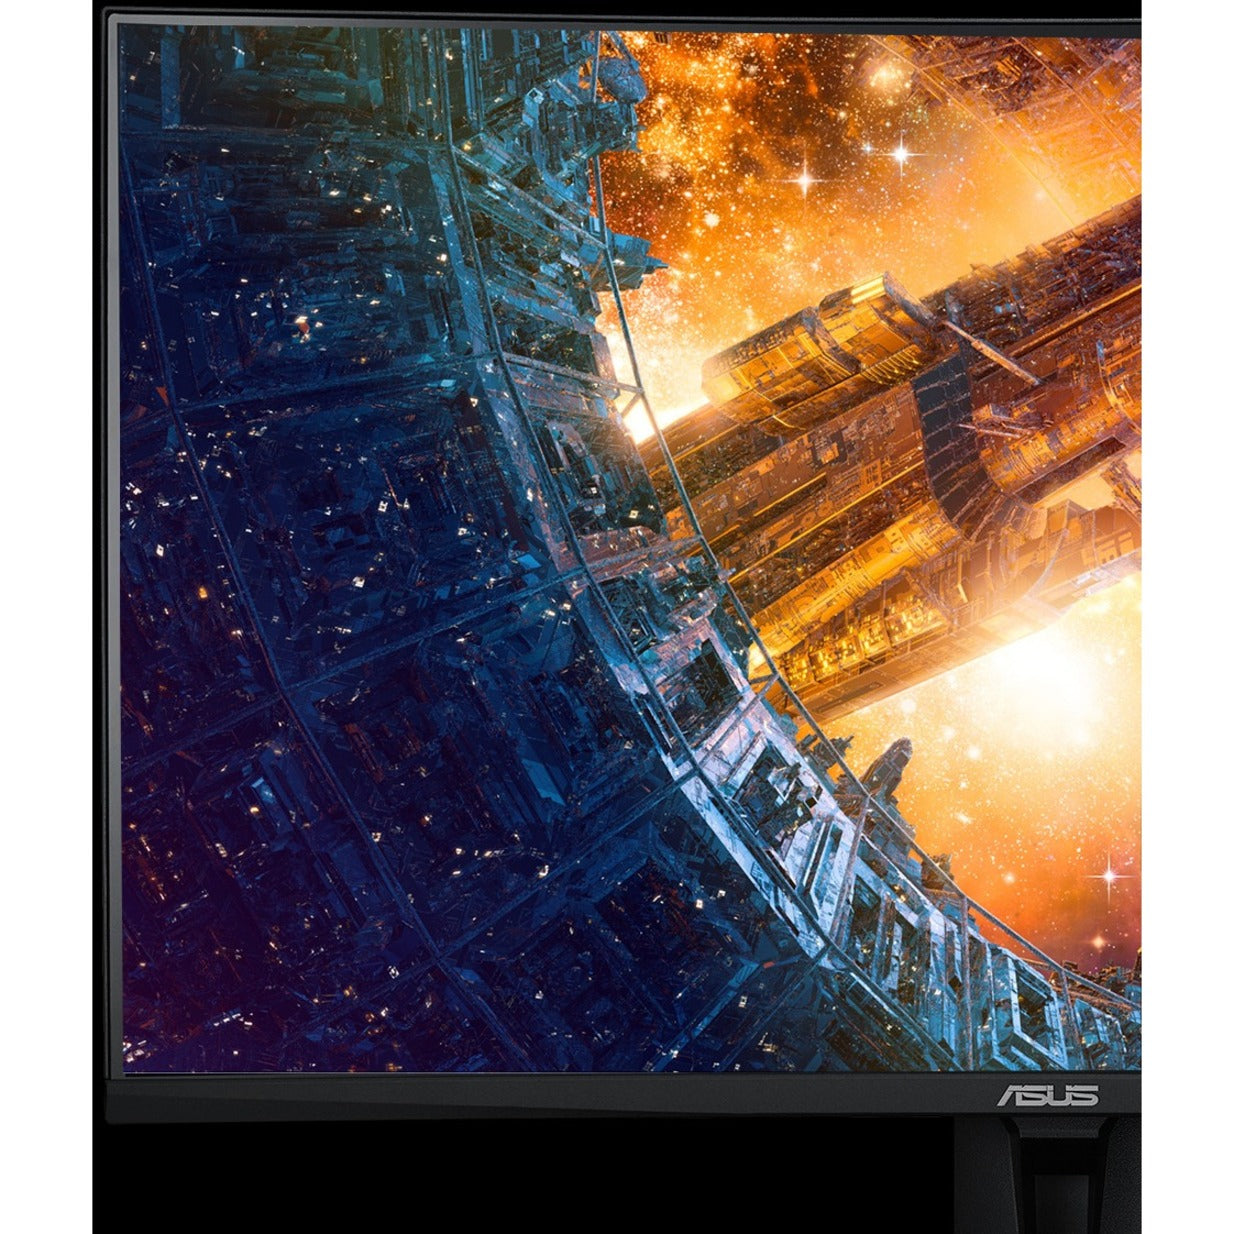 TUF VG27VQM Gaming LCD Monitor, 27" Full HD Curved Screen, 240Hz Refresh Rate, FreeSync Premium